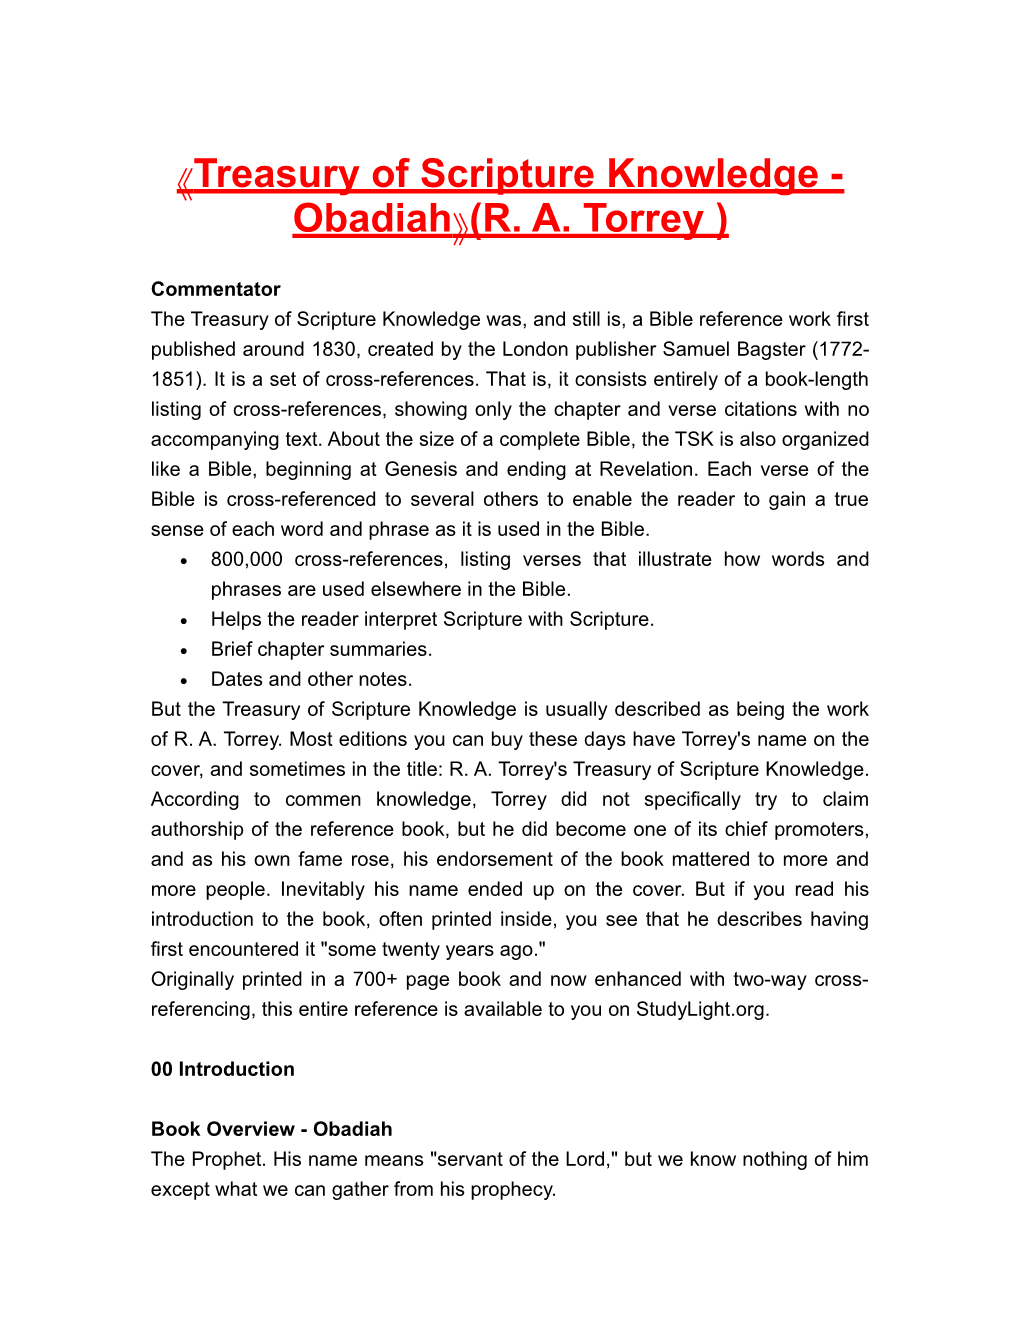 Treasuryofscriptureknowledge - Obadiah (R. A.Torrey)